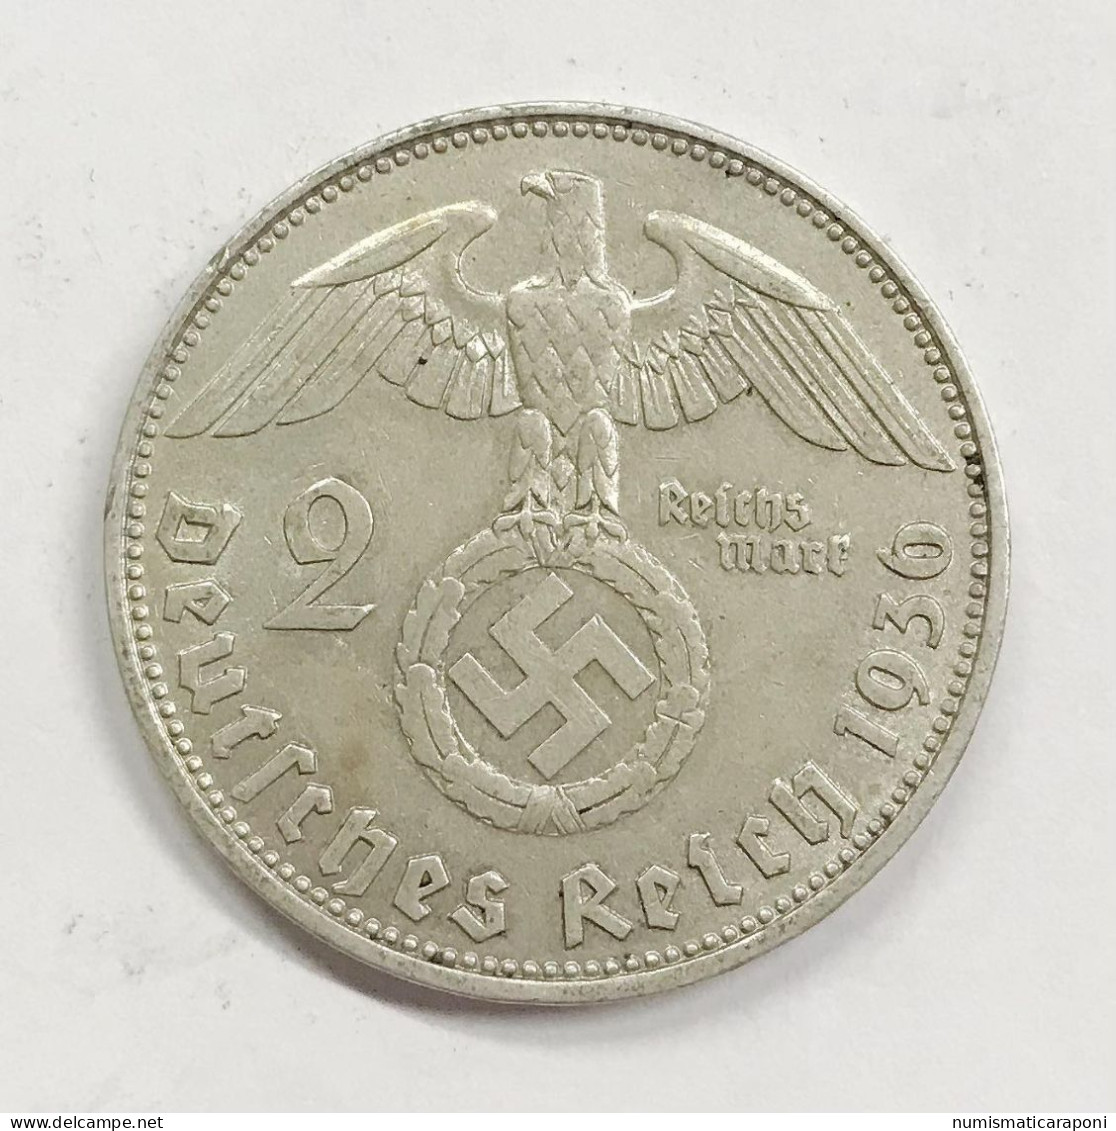 Germania Germany 2 Reichs Mark   Reichsmark 1936 D  Paul.v. Hindenburg  E.1100 - 2 Reichsmark